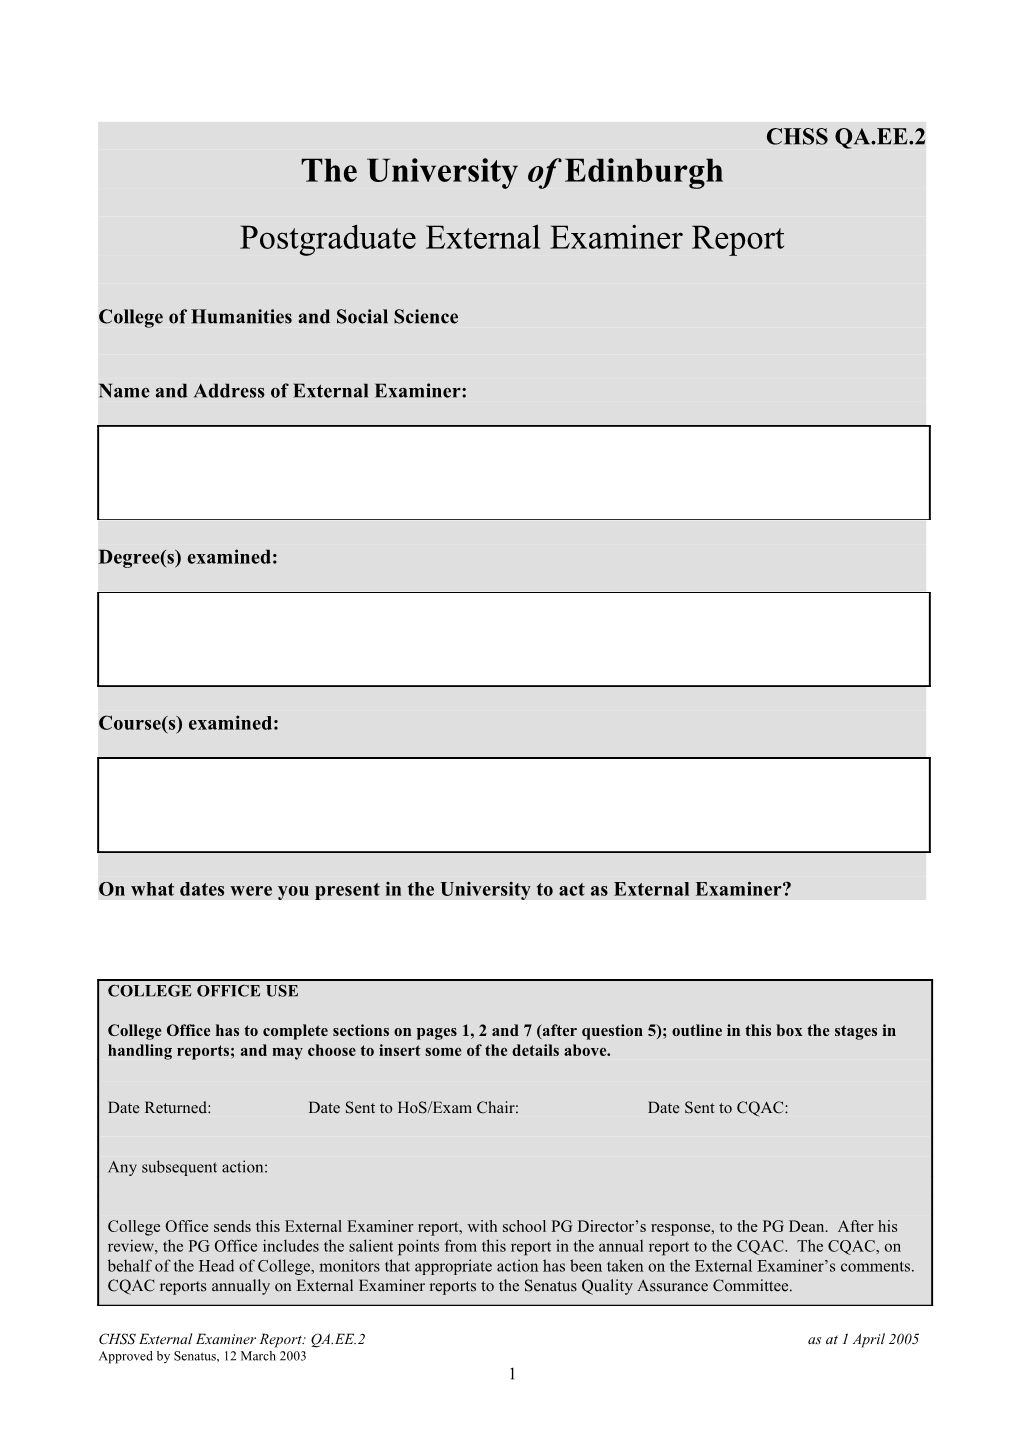 Postgraduate External Examiner Report